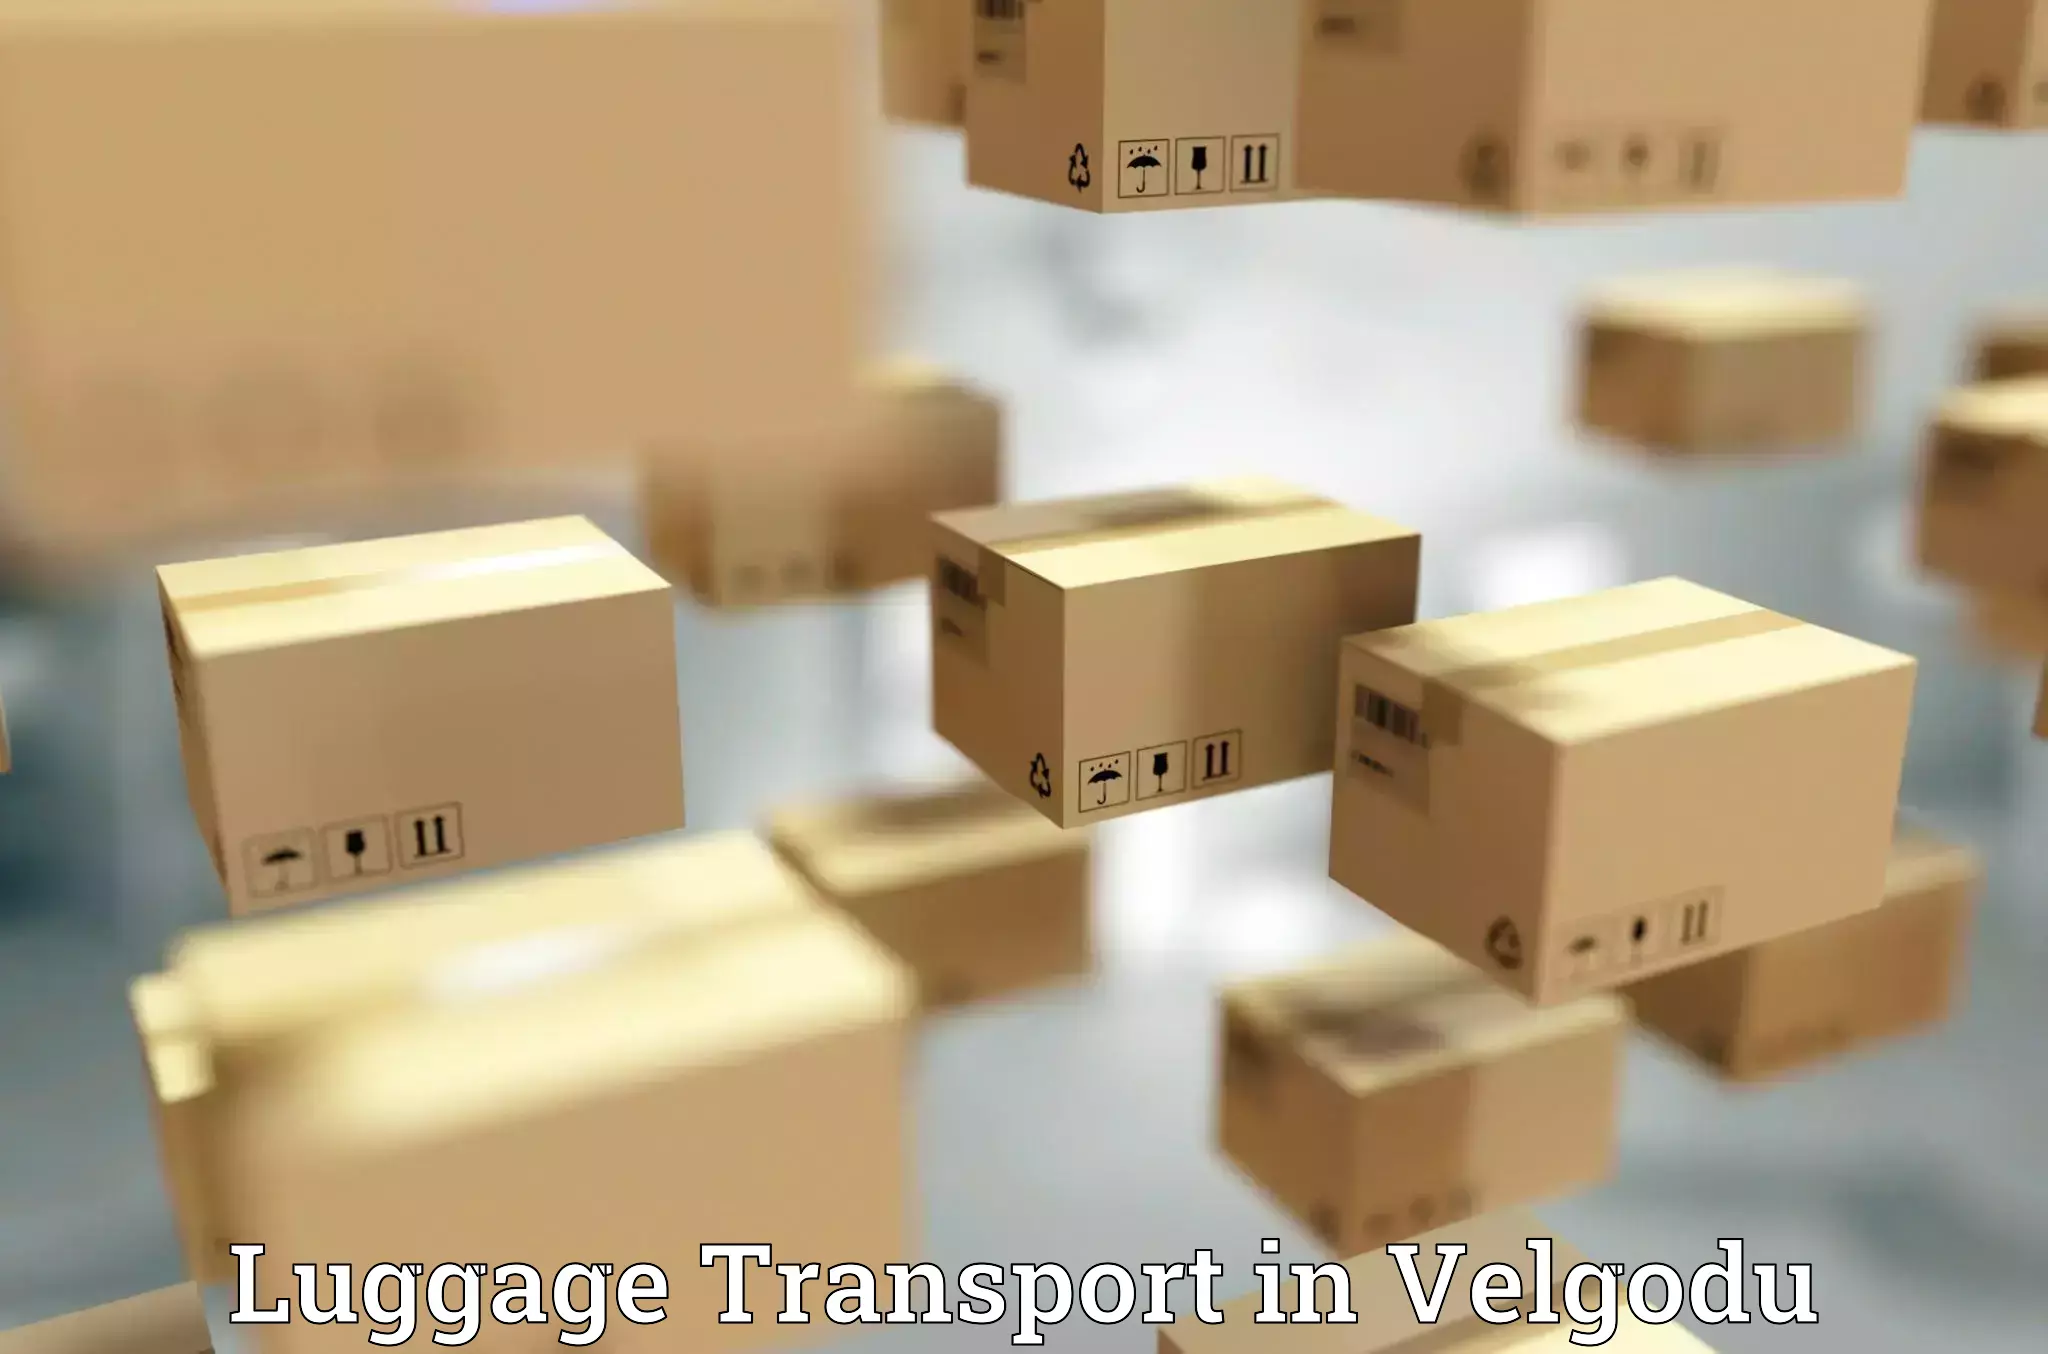 Baggage transport network in Velgodu